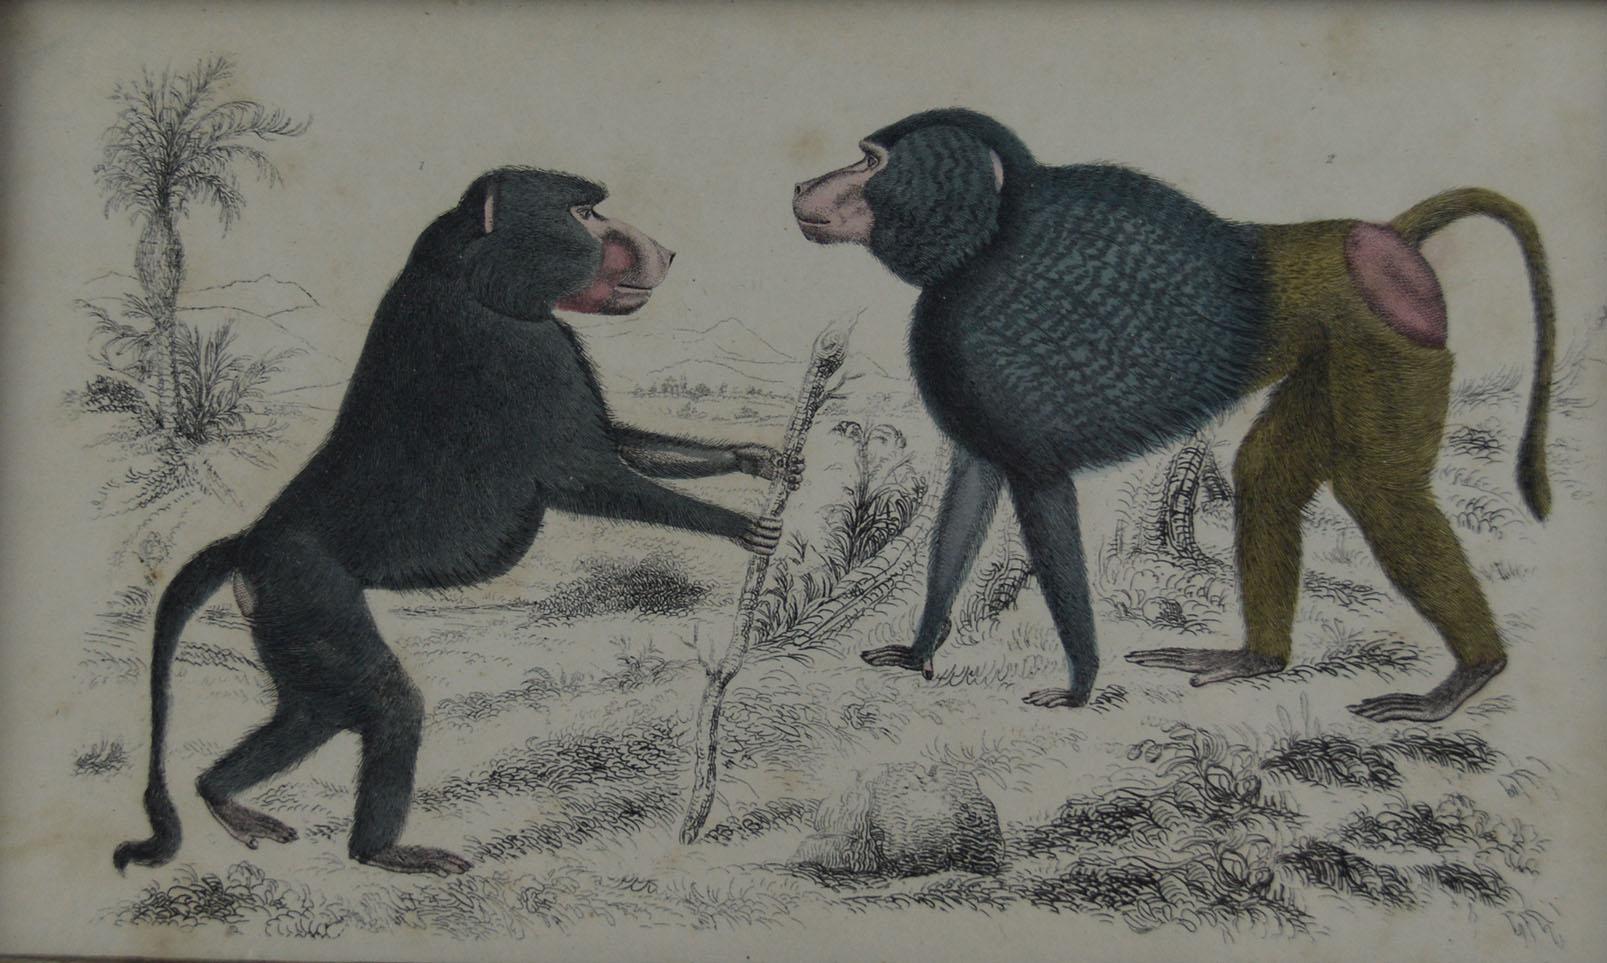 Folk Art Original Antique Print of Monkeys, 1847